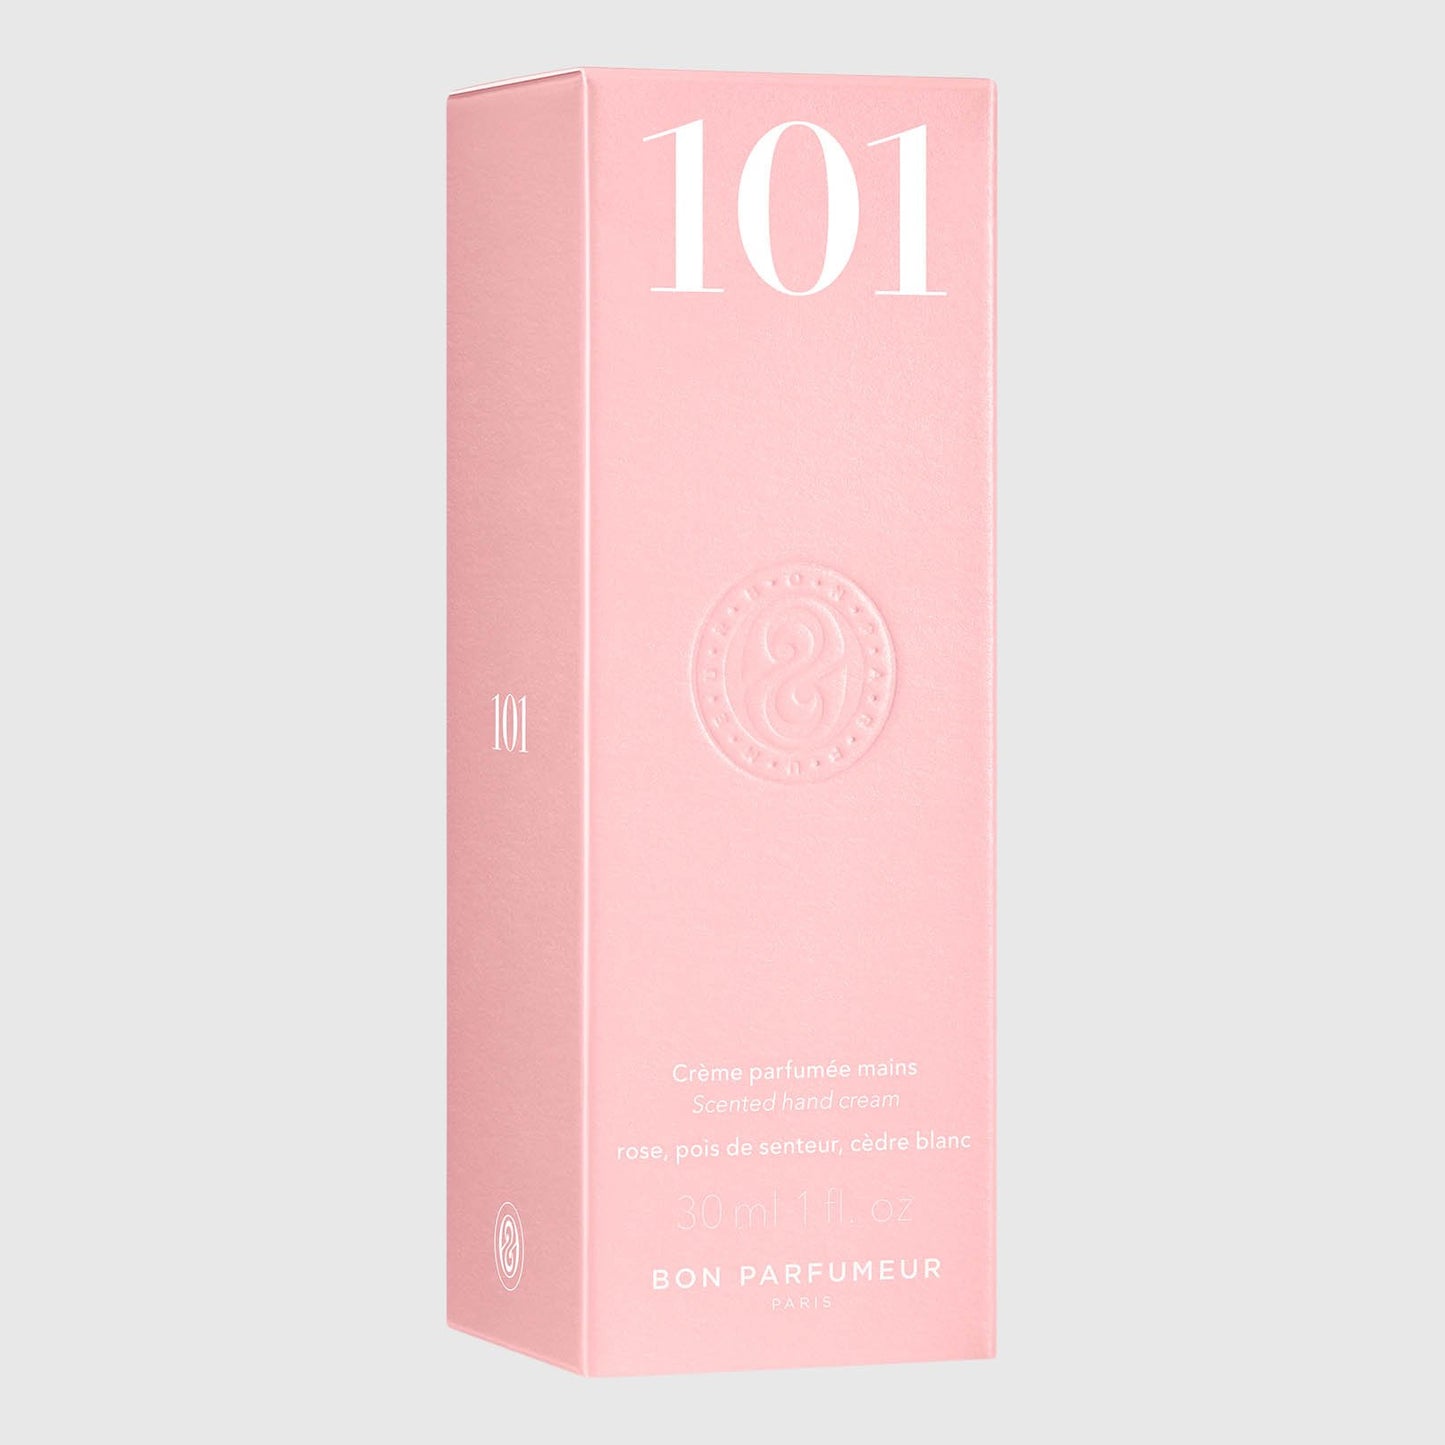 Bon Parfumeur Hand Cream 101 Hand & Body Bon Parfumeur 